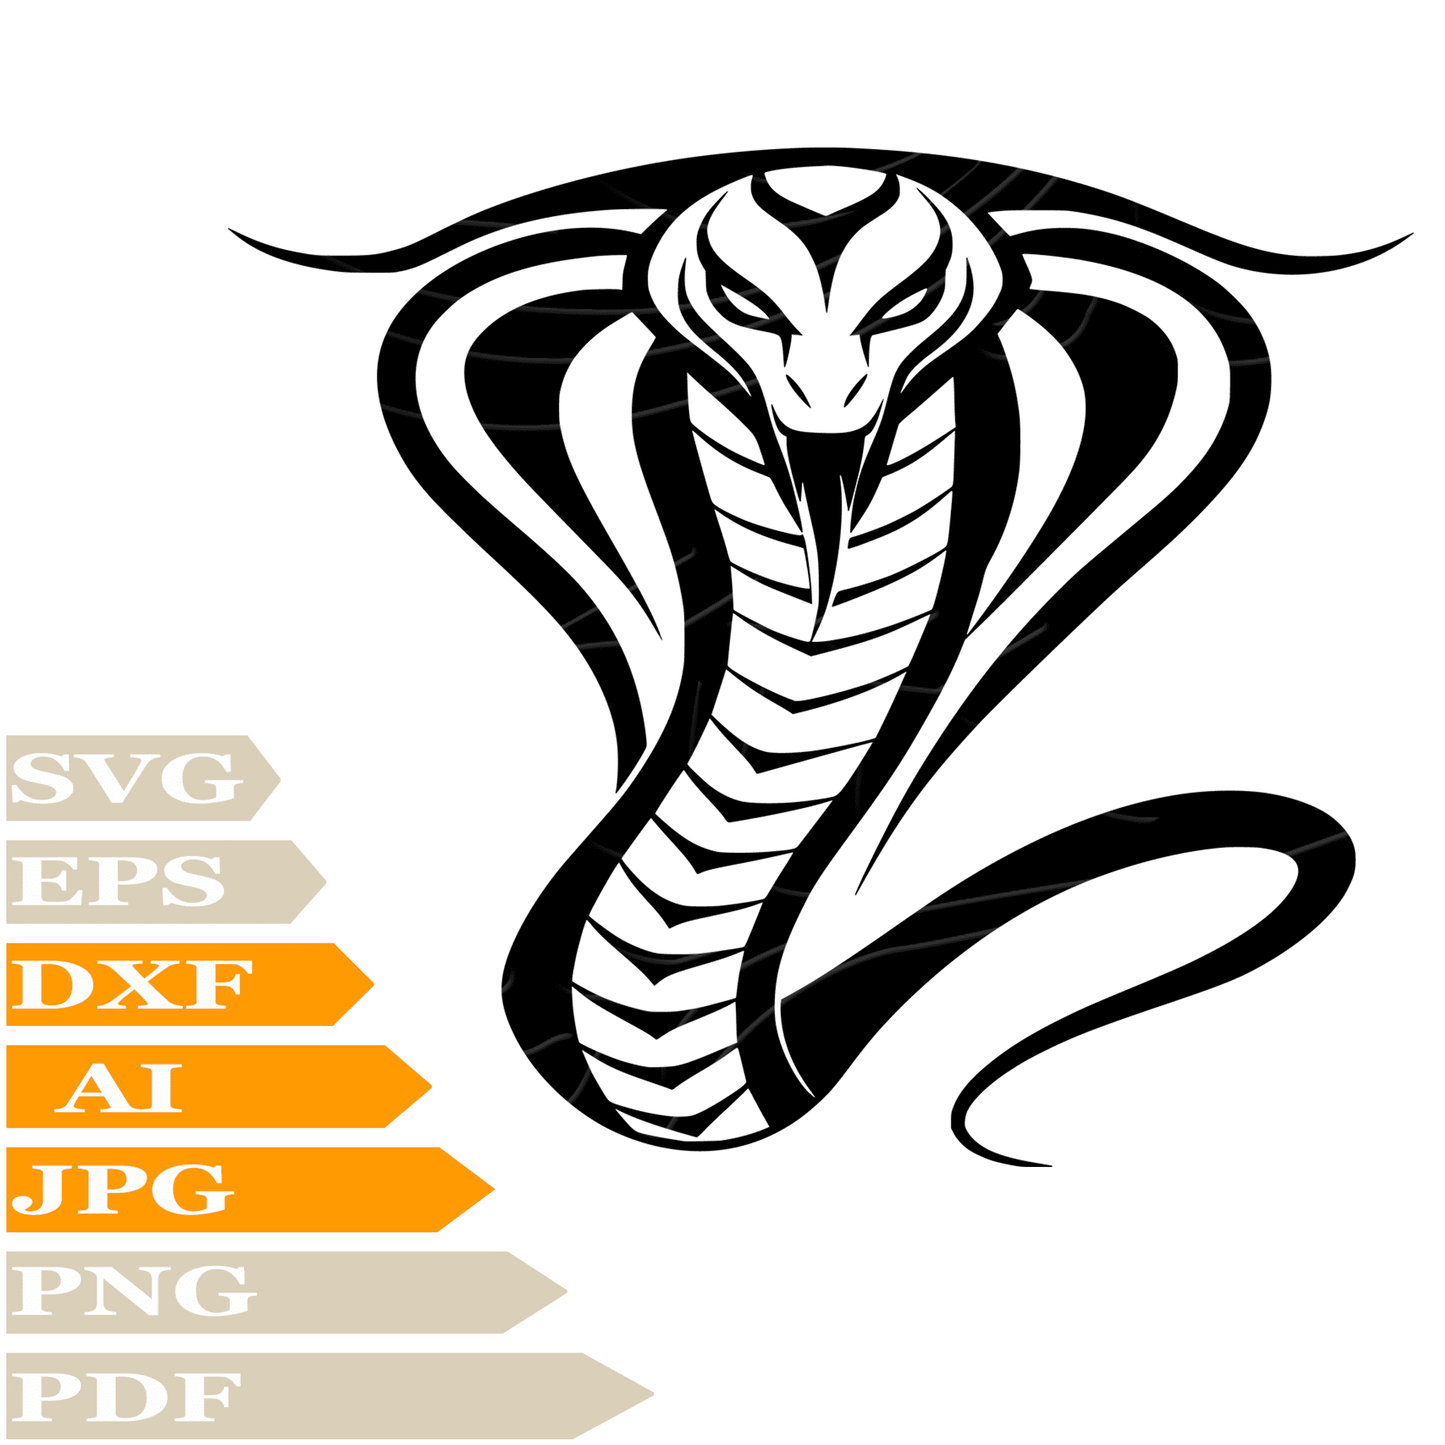 Snake SVG, Python Snake SVG File, Reptile Cobra SVG Design, Snake Cobra Vector Graphics, PNG, Cricut, Image Cut, Clipart,  For Tattoo, Cut File, Silhouette